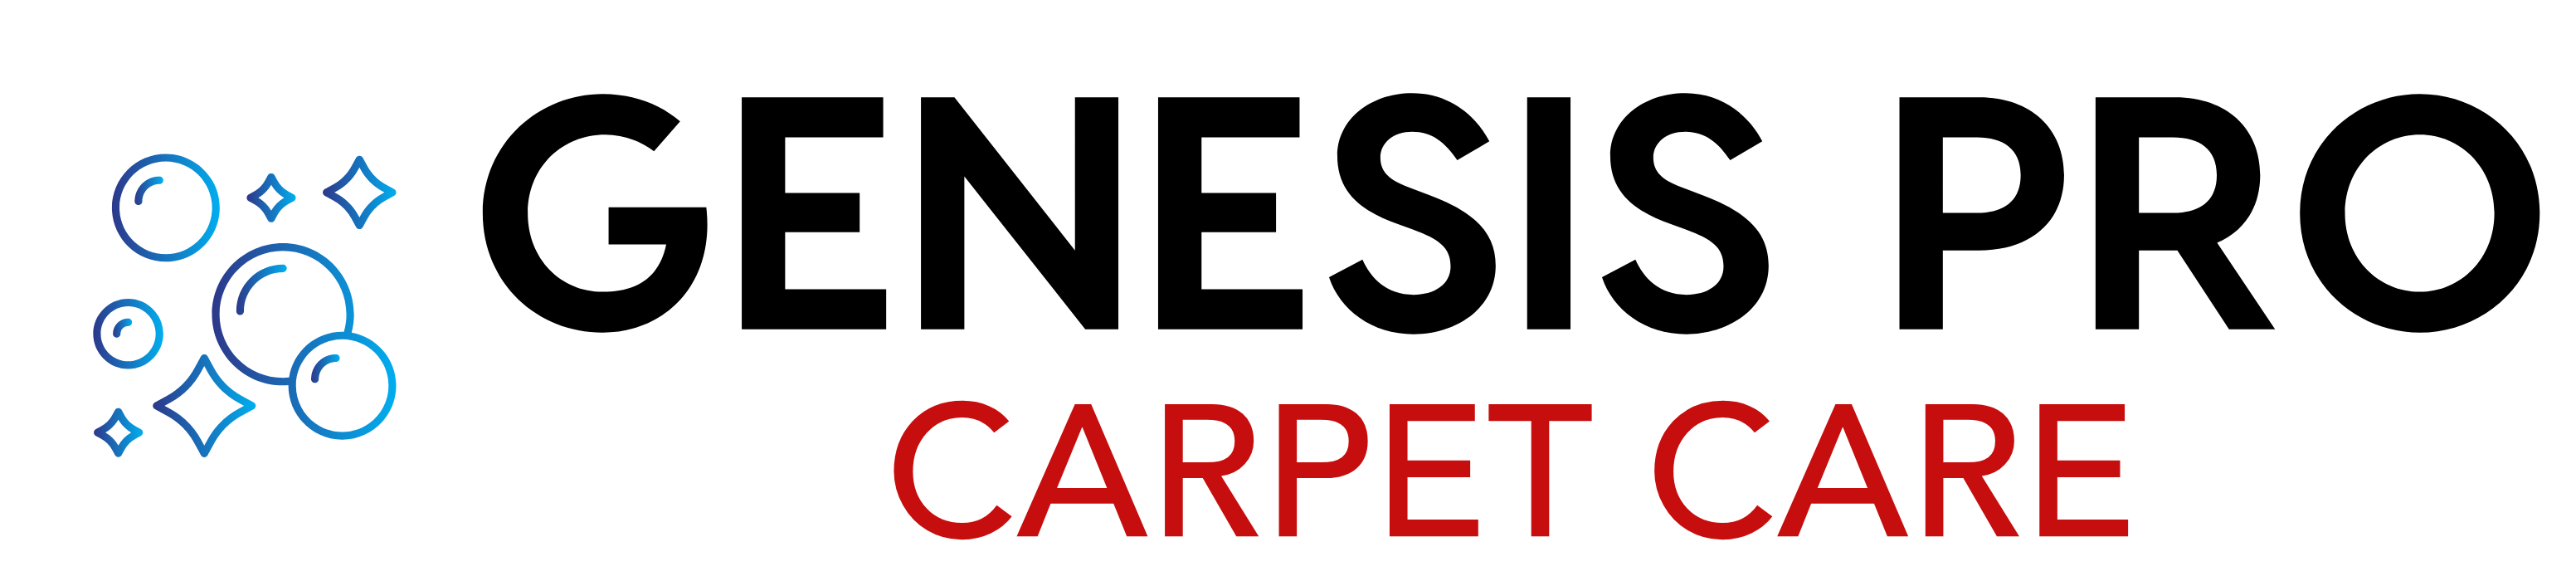 Genesis Pro Carpet Care 